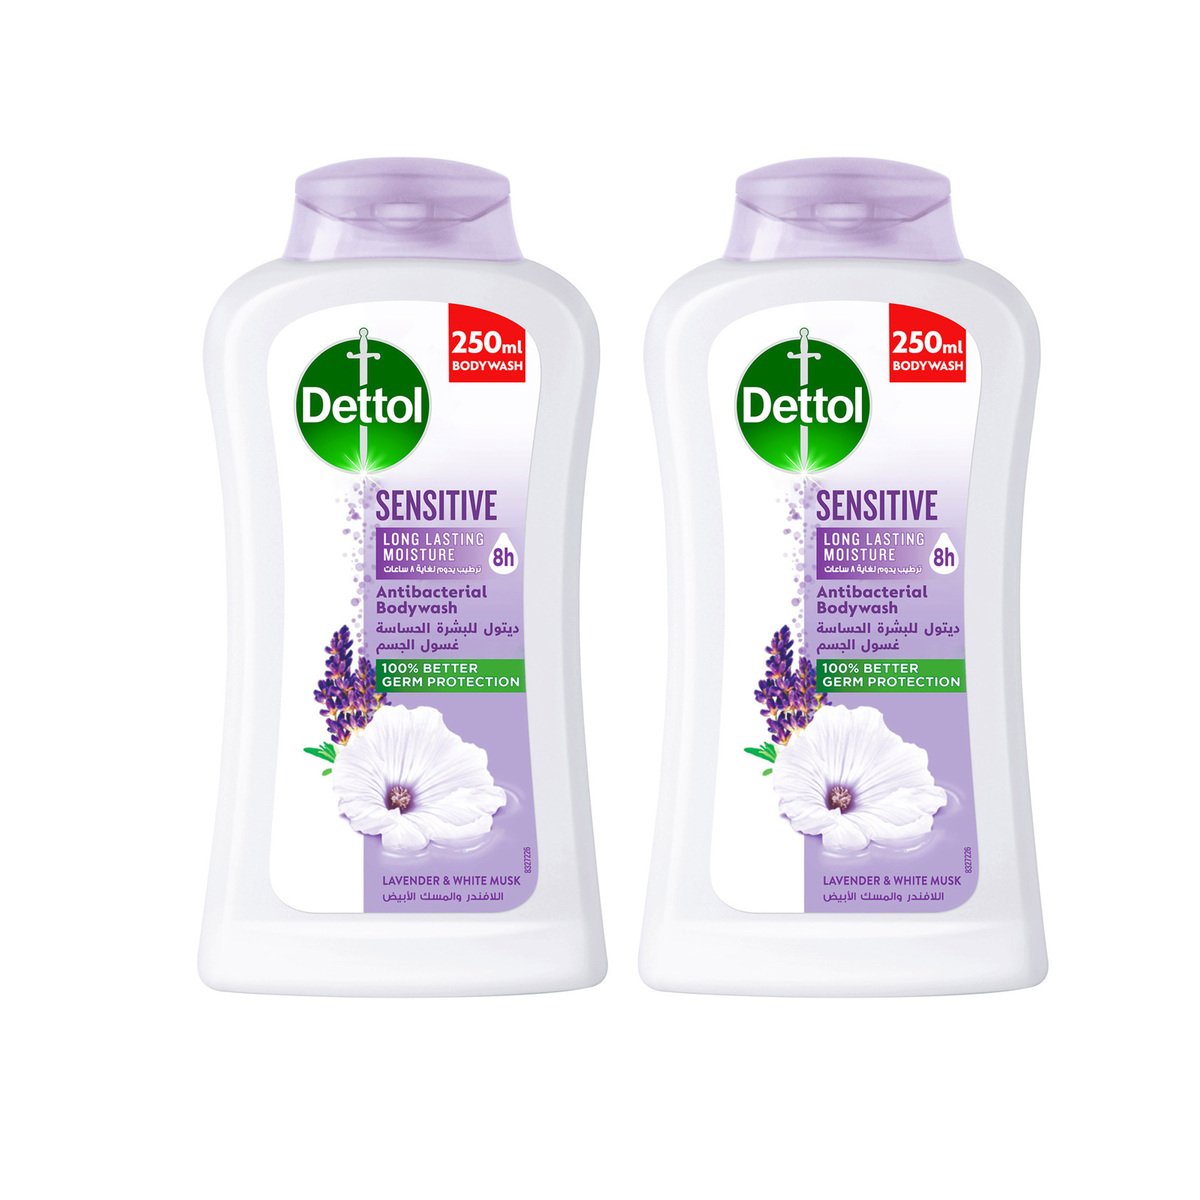 Dettol Antibacterial Bodywash Sensitive Value Pack 2 x 250 ml